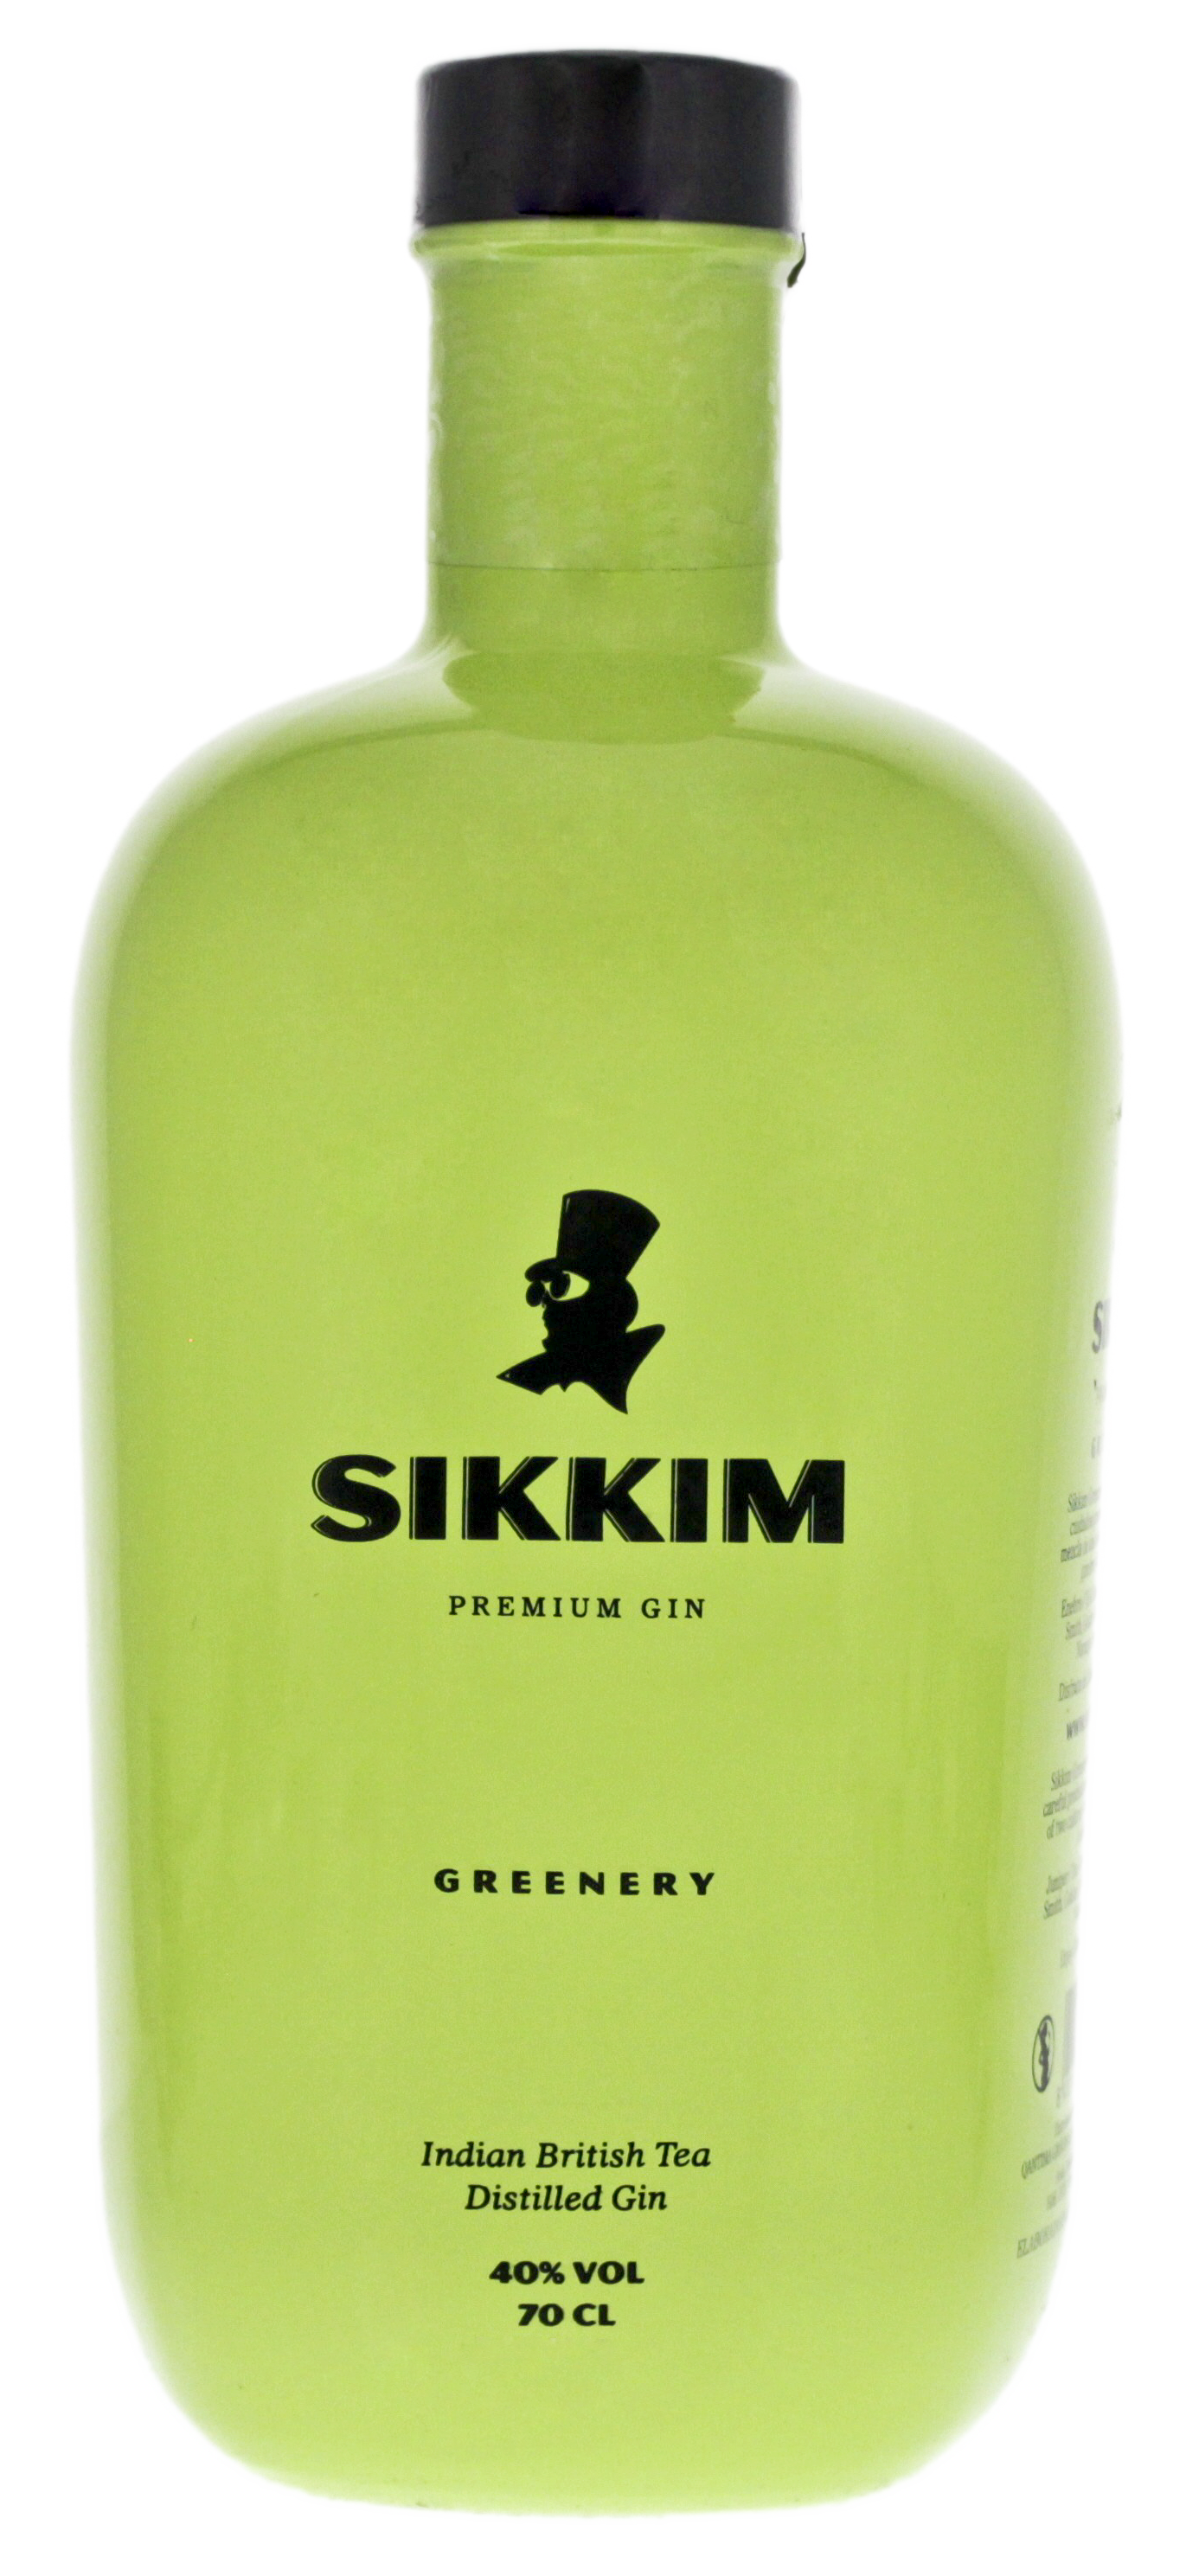 Sikkim Greenery Gin